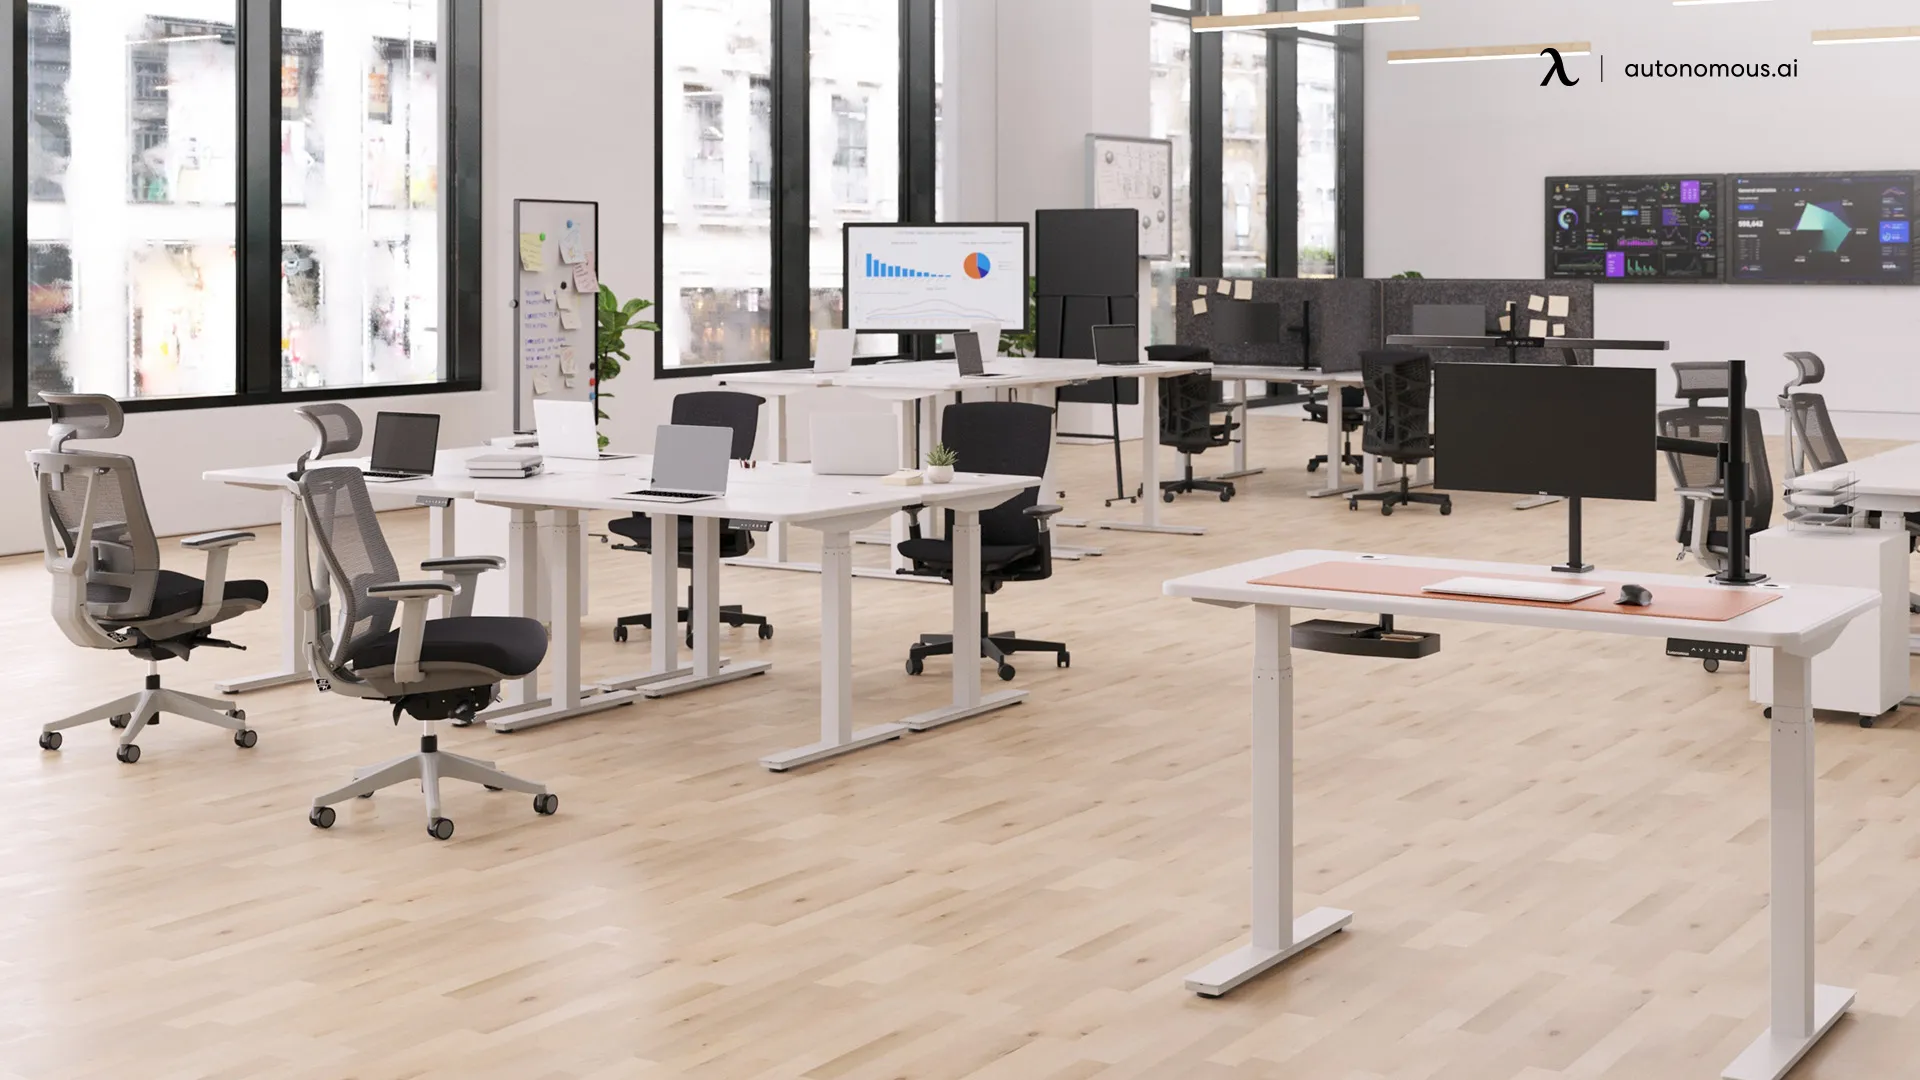 Autonomous office chairs in toronto